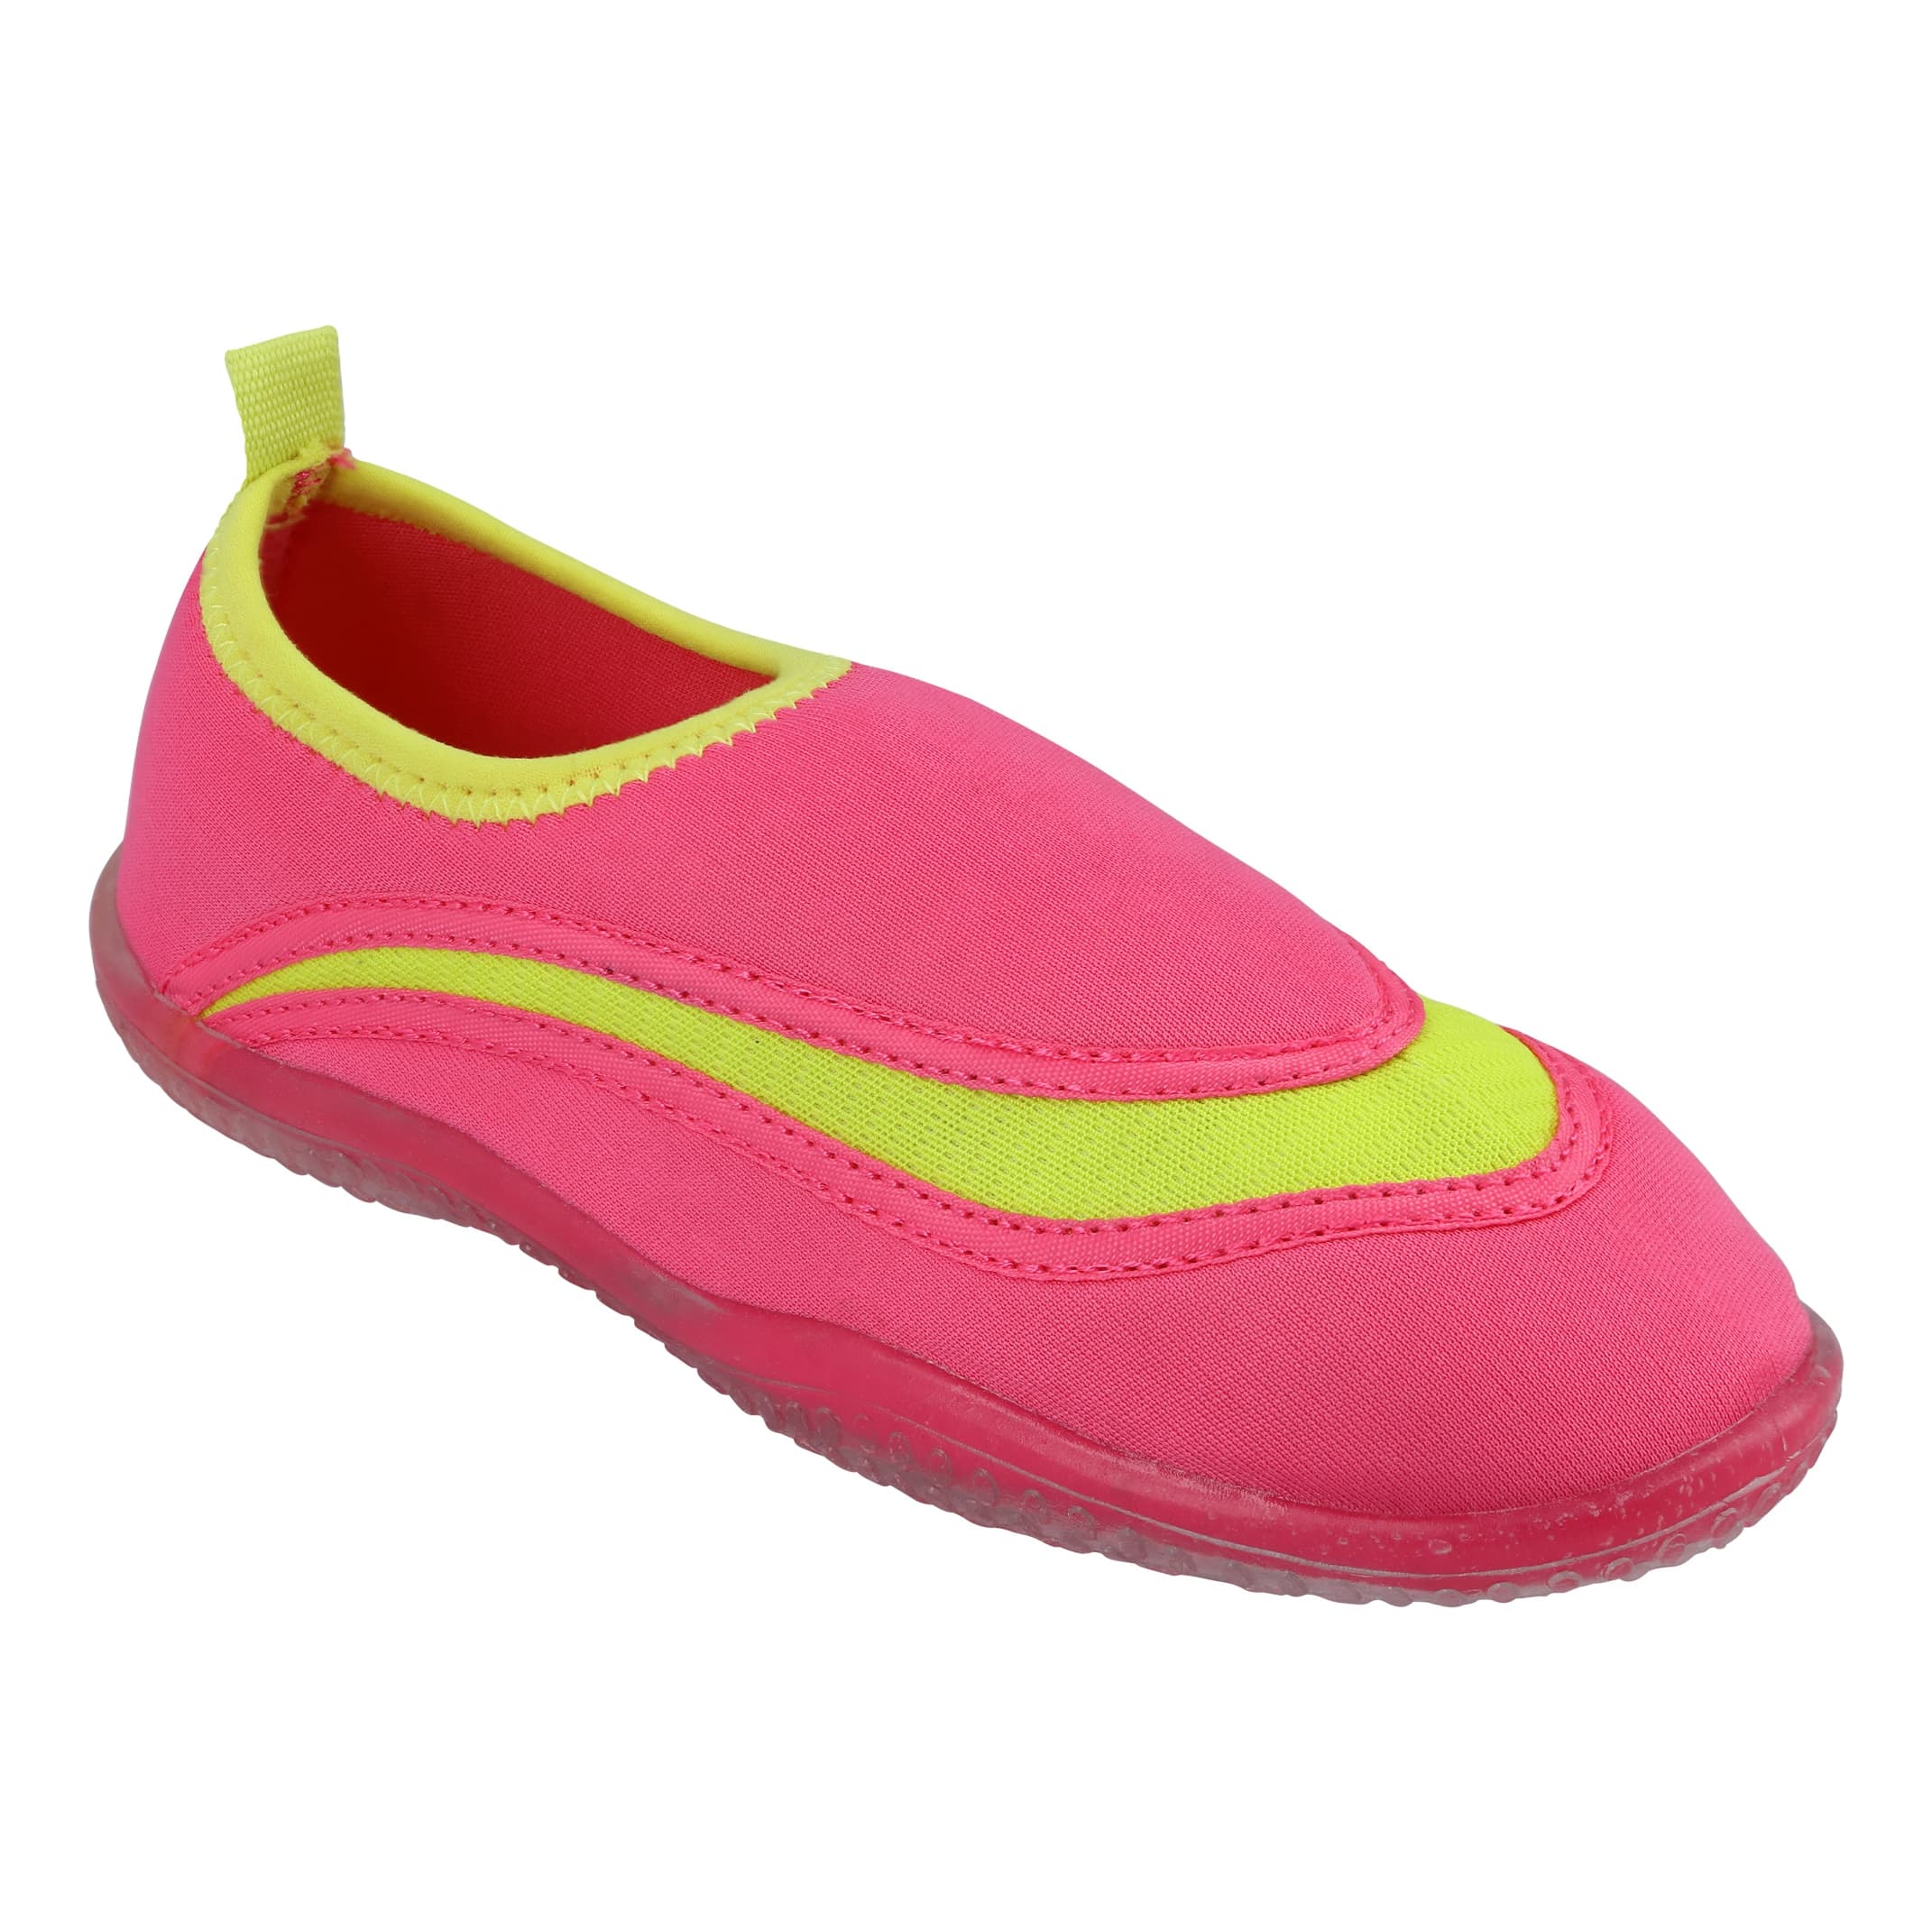 White River™ Children’s Aqua Sox Water Shoes - Yellow/Pink